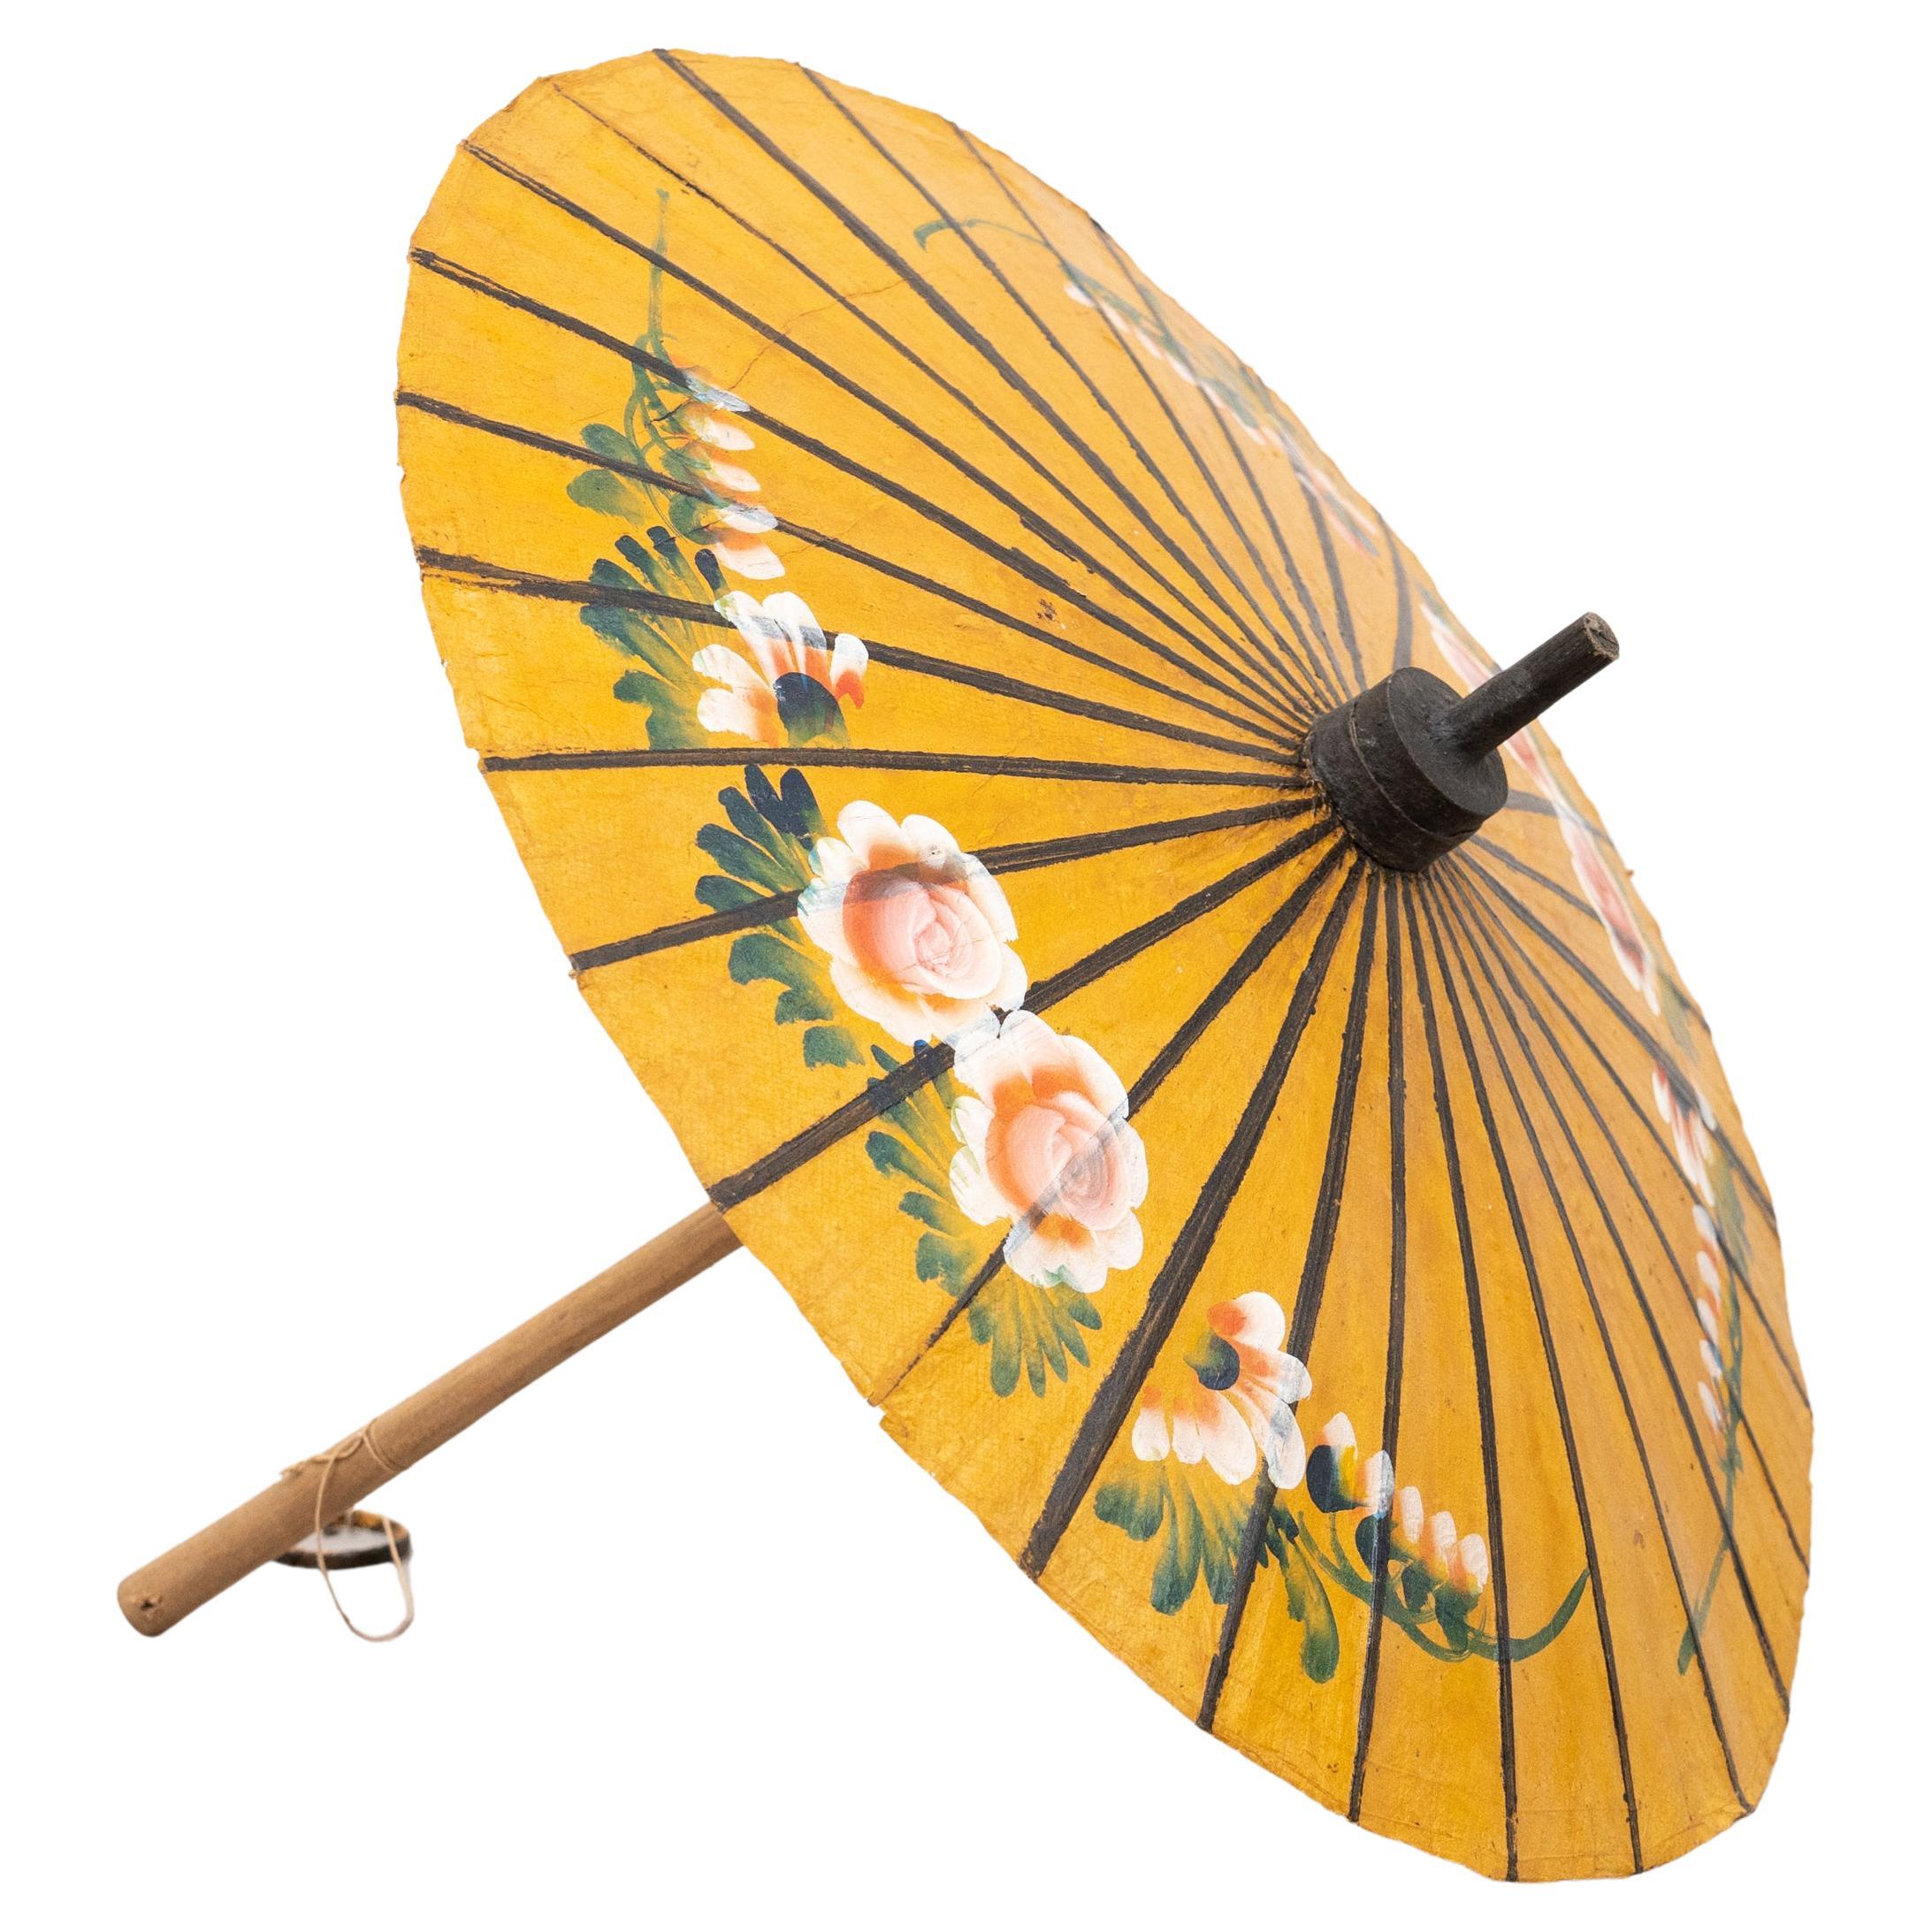 Handpainted Bamboo Umbrella, circa 1950